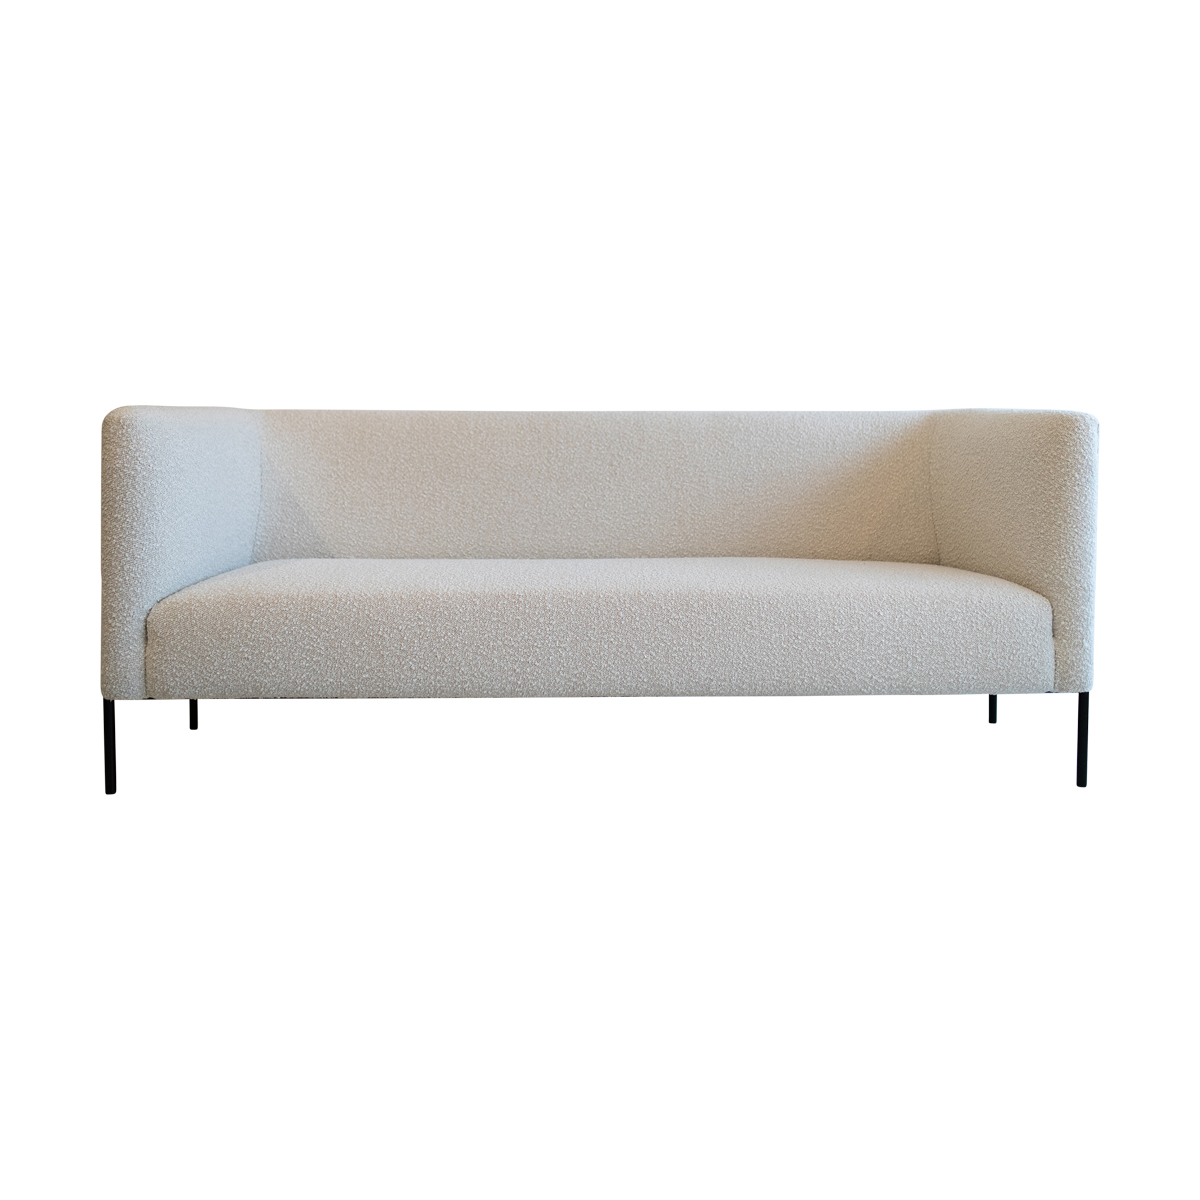 Upholstered rounded back sofa - LIM.co.za